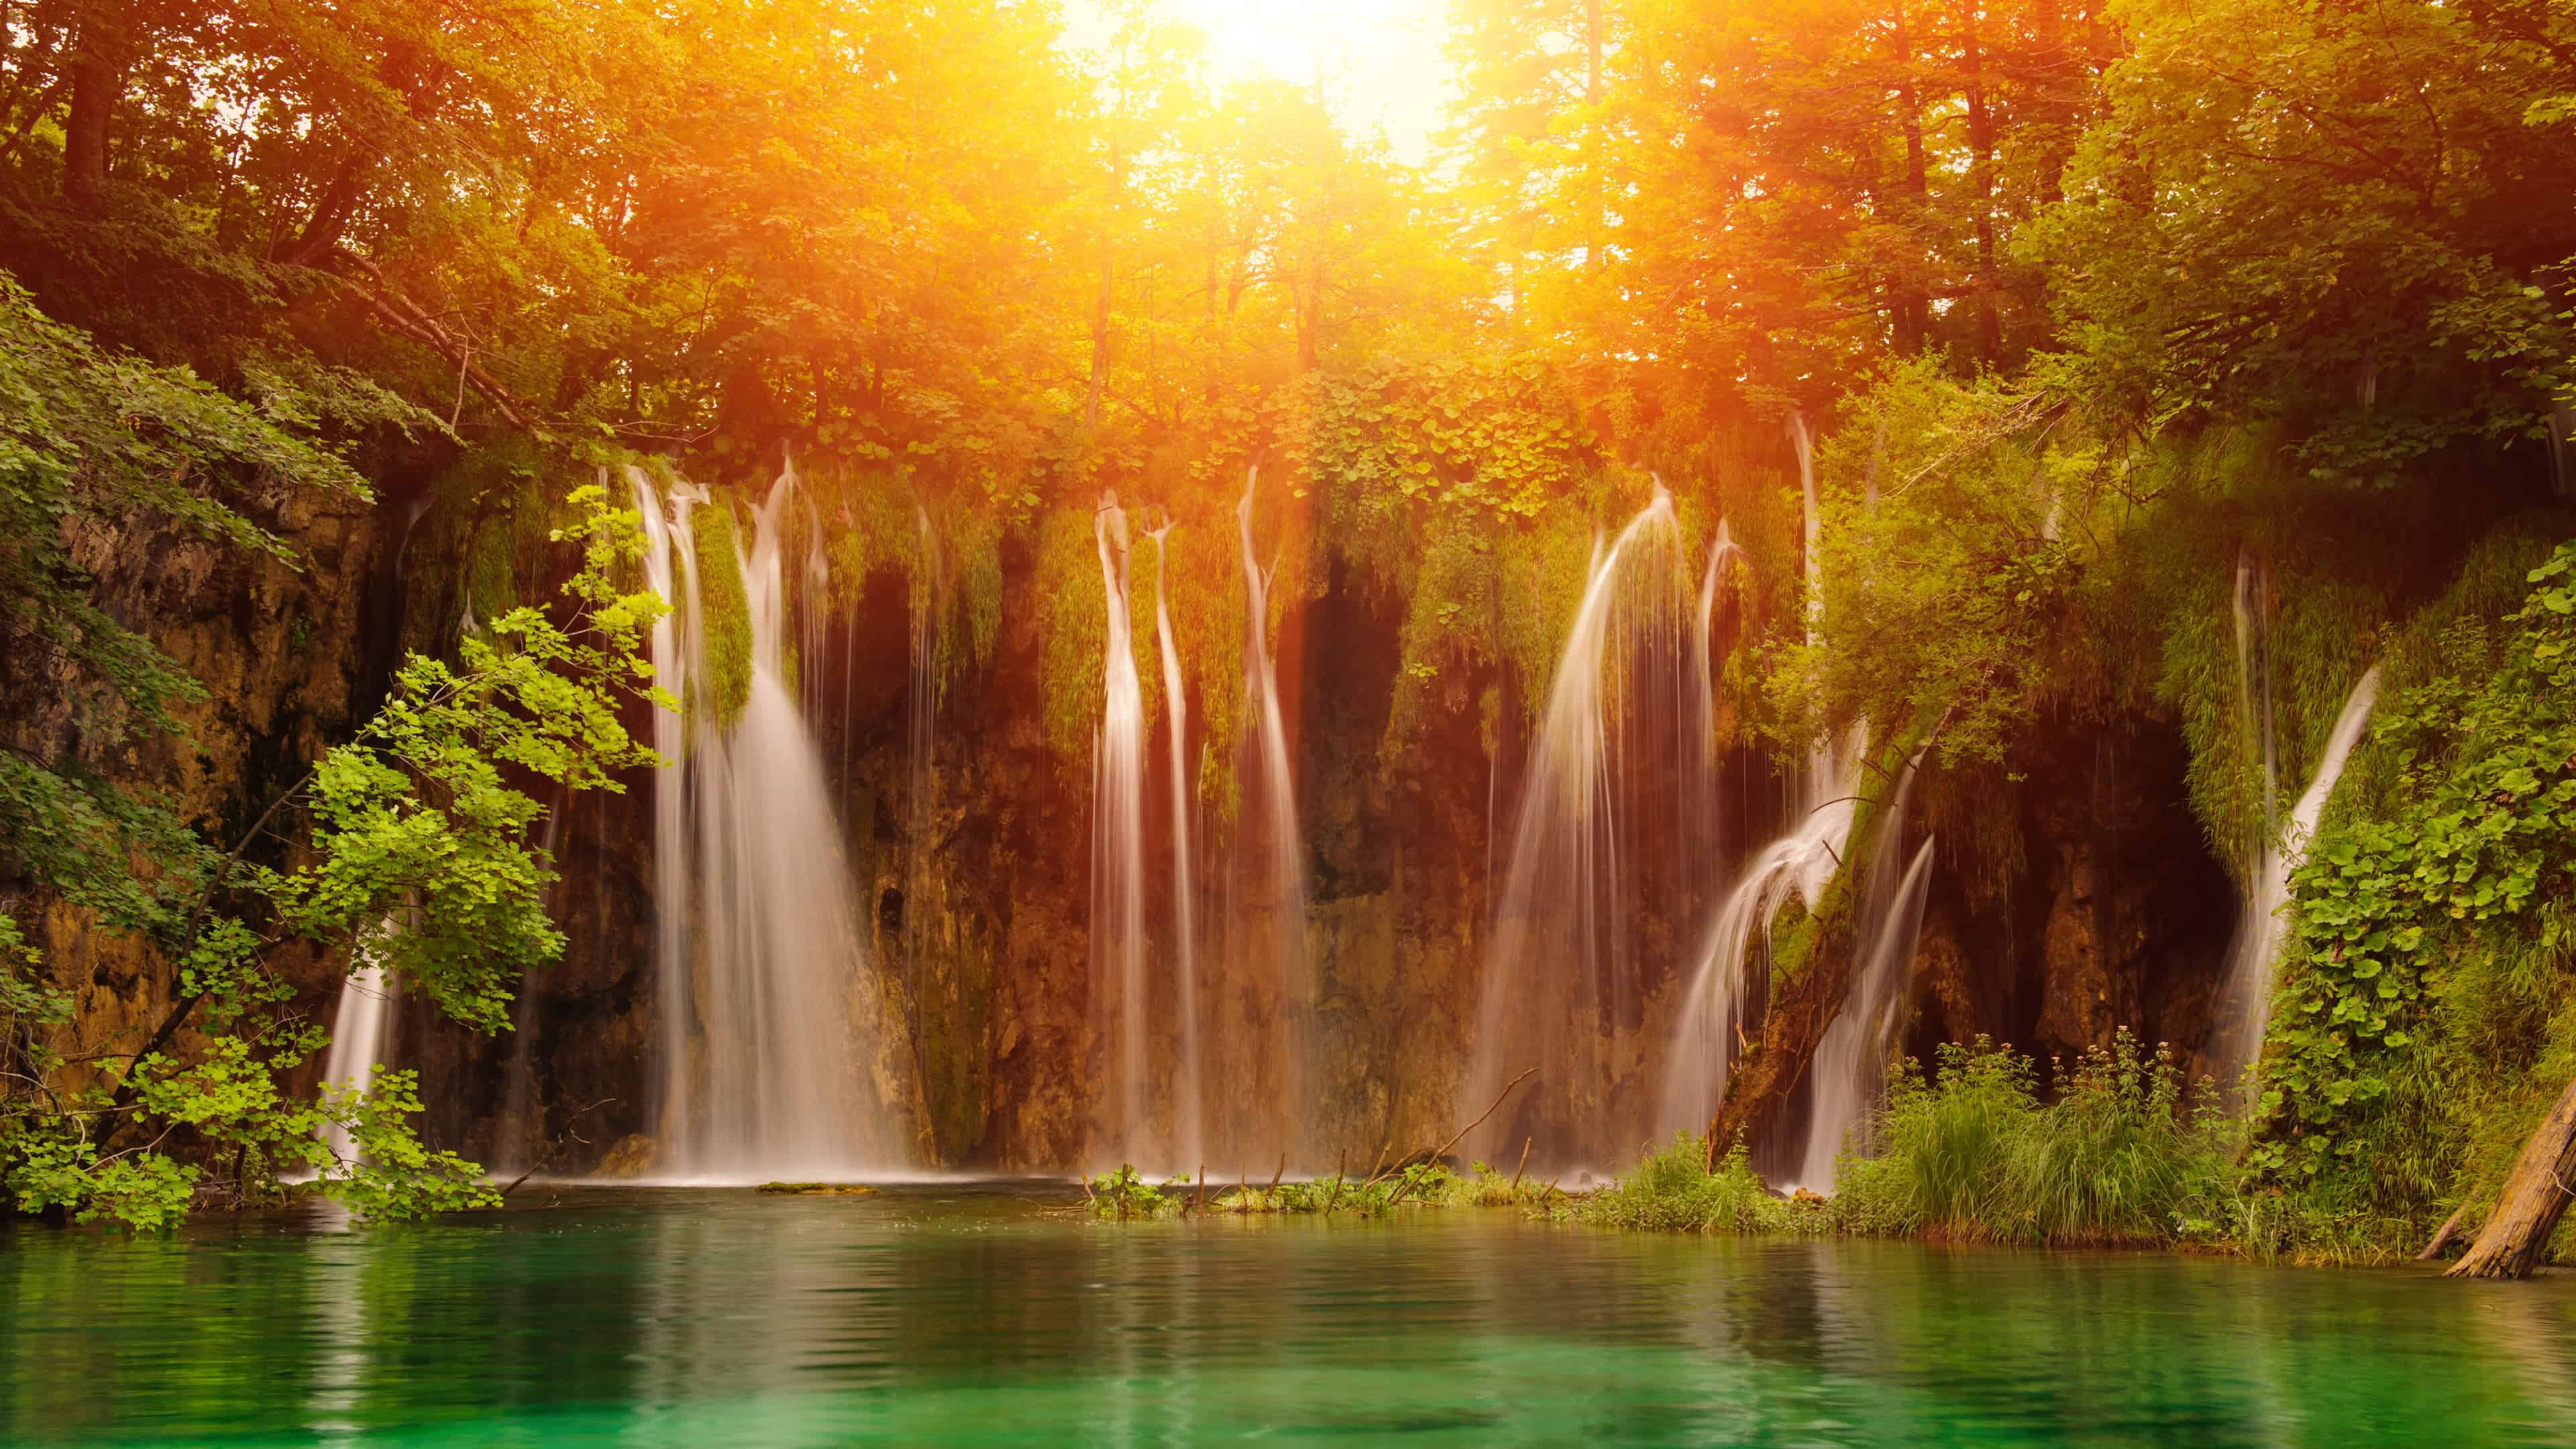 Free download Waterfall Plitvice Lakes National Park Croatia UHD